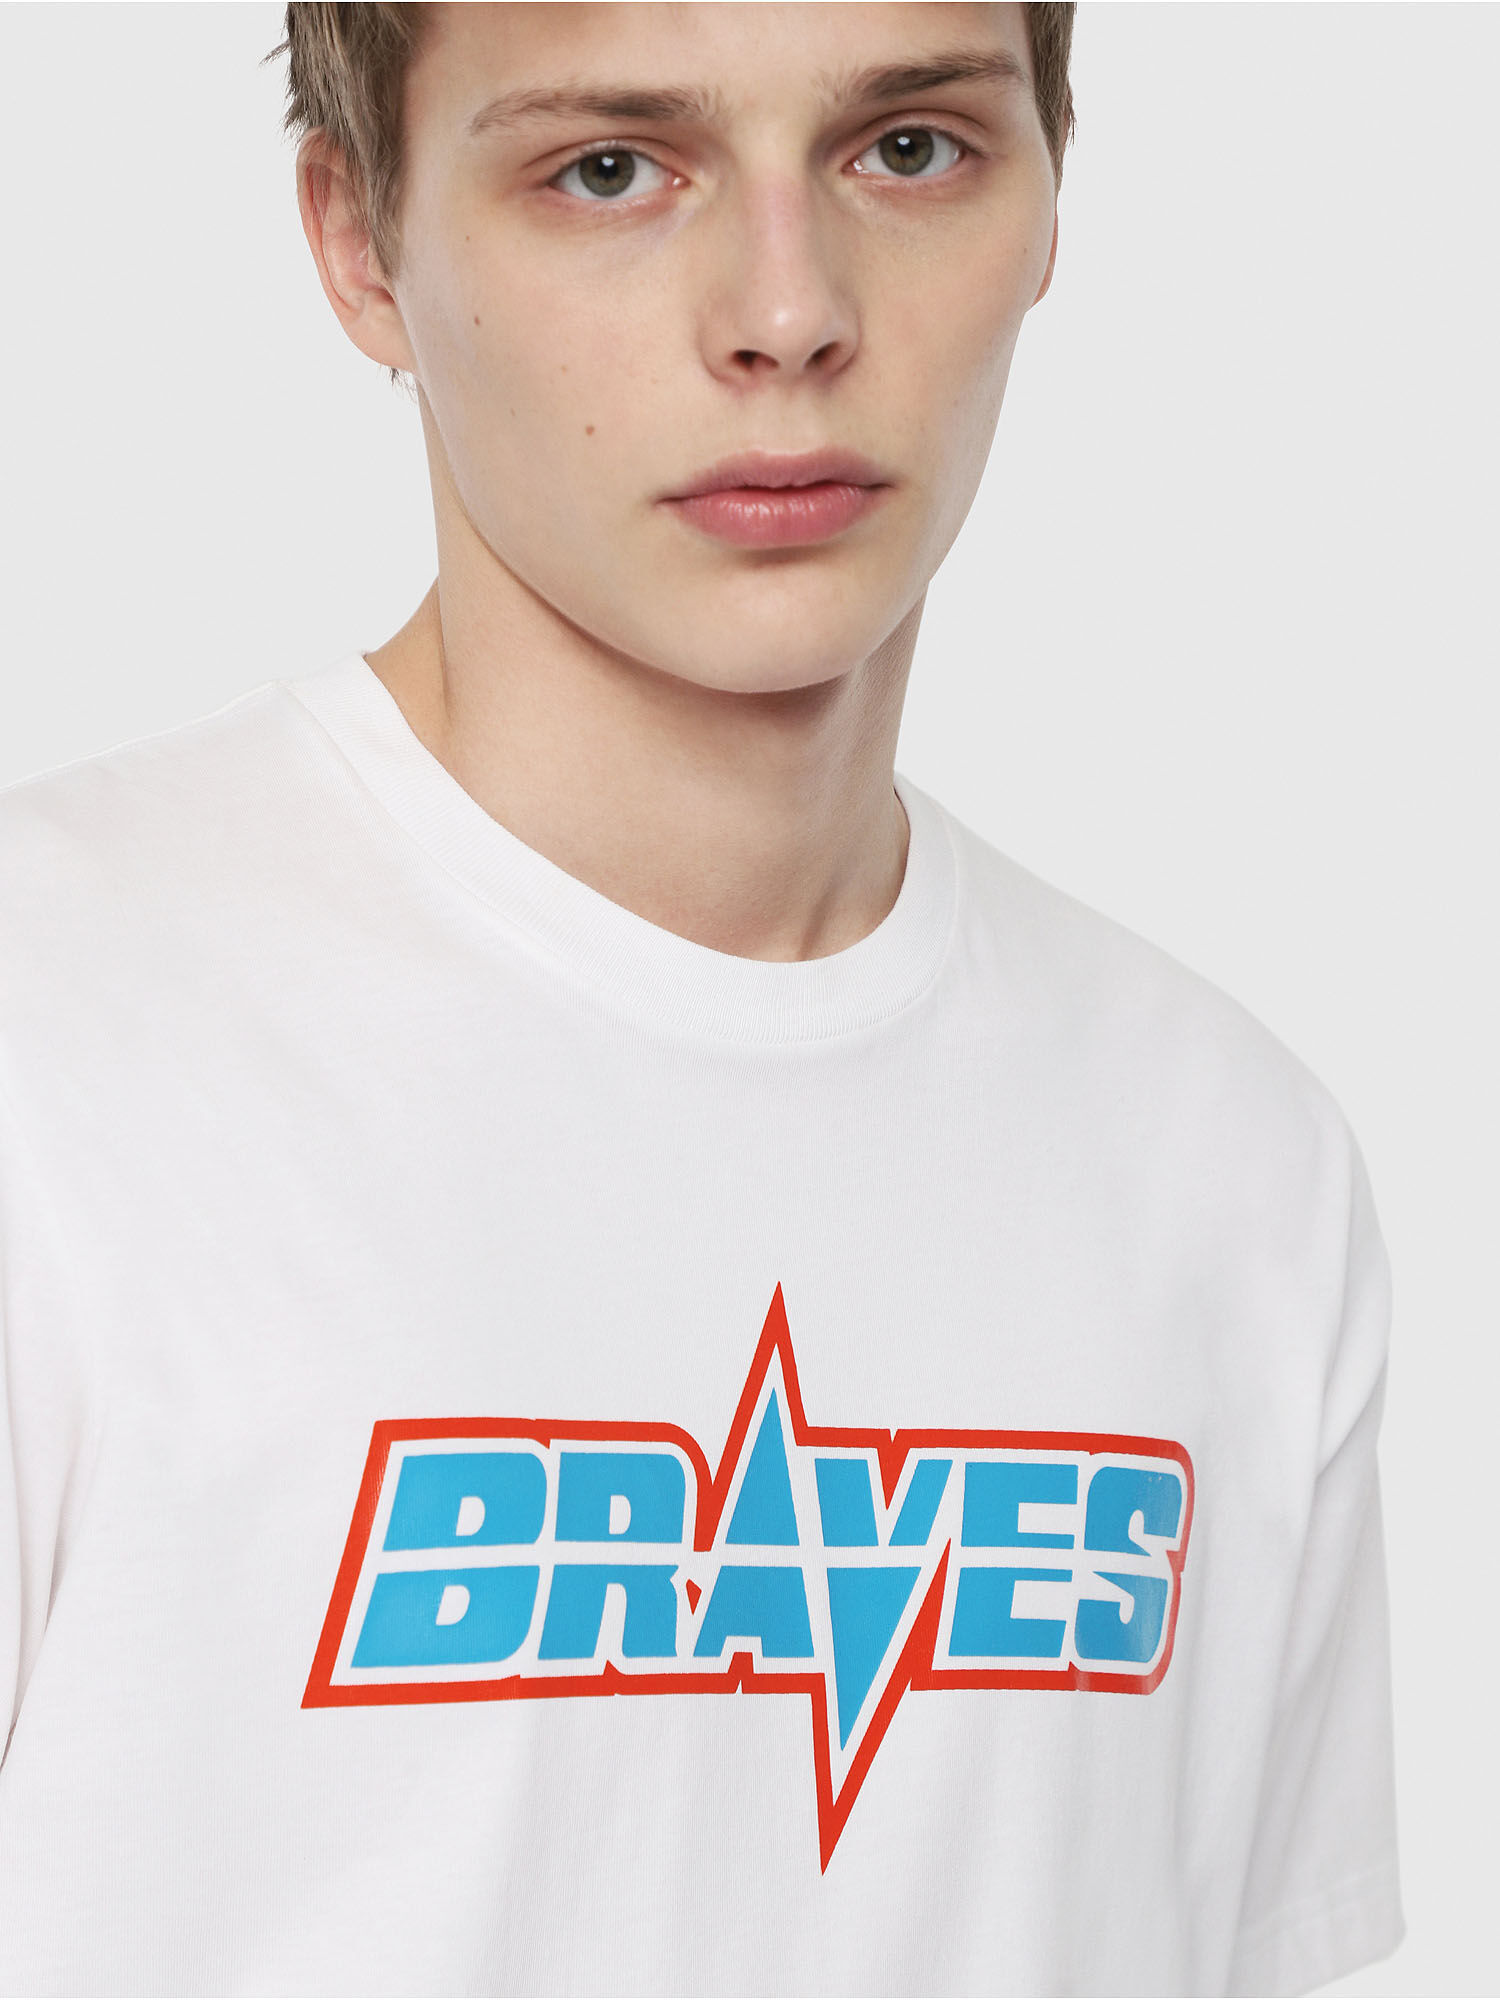 white braves t shirt